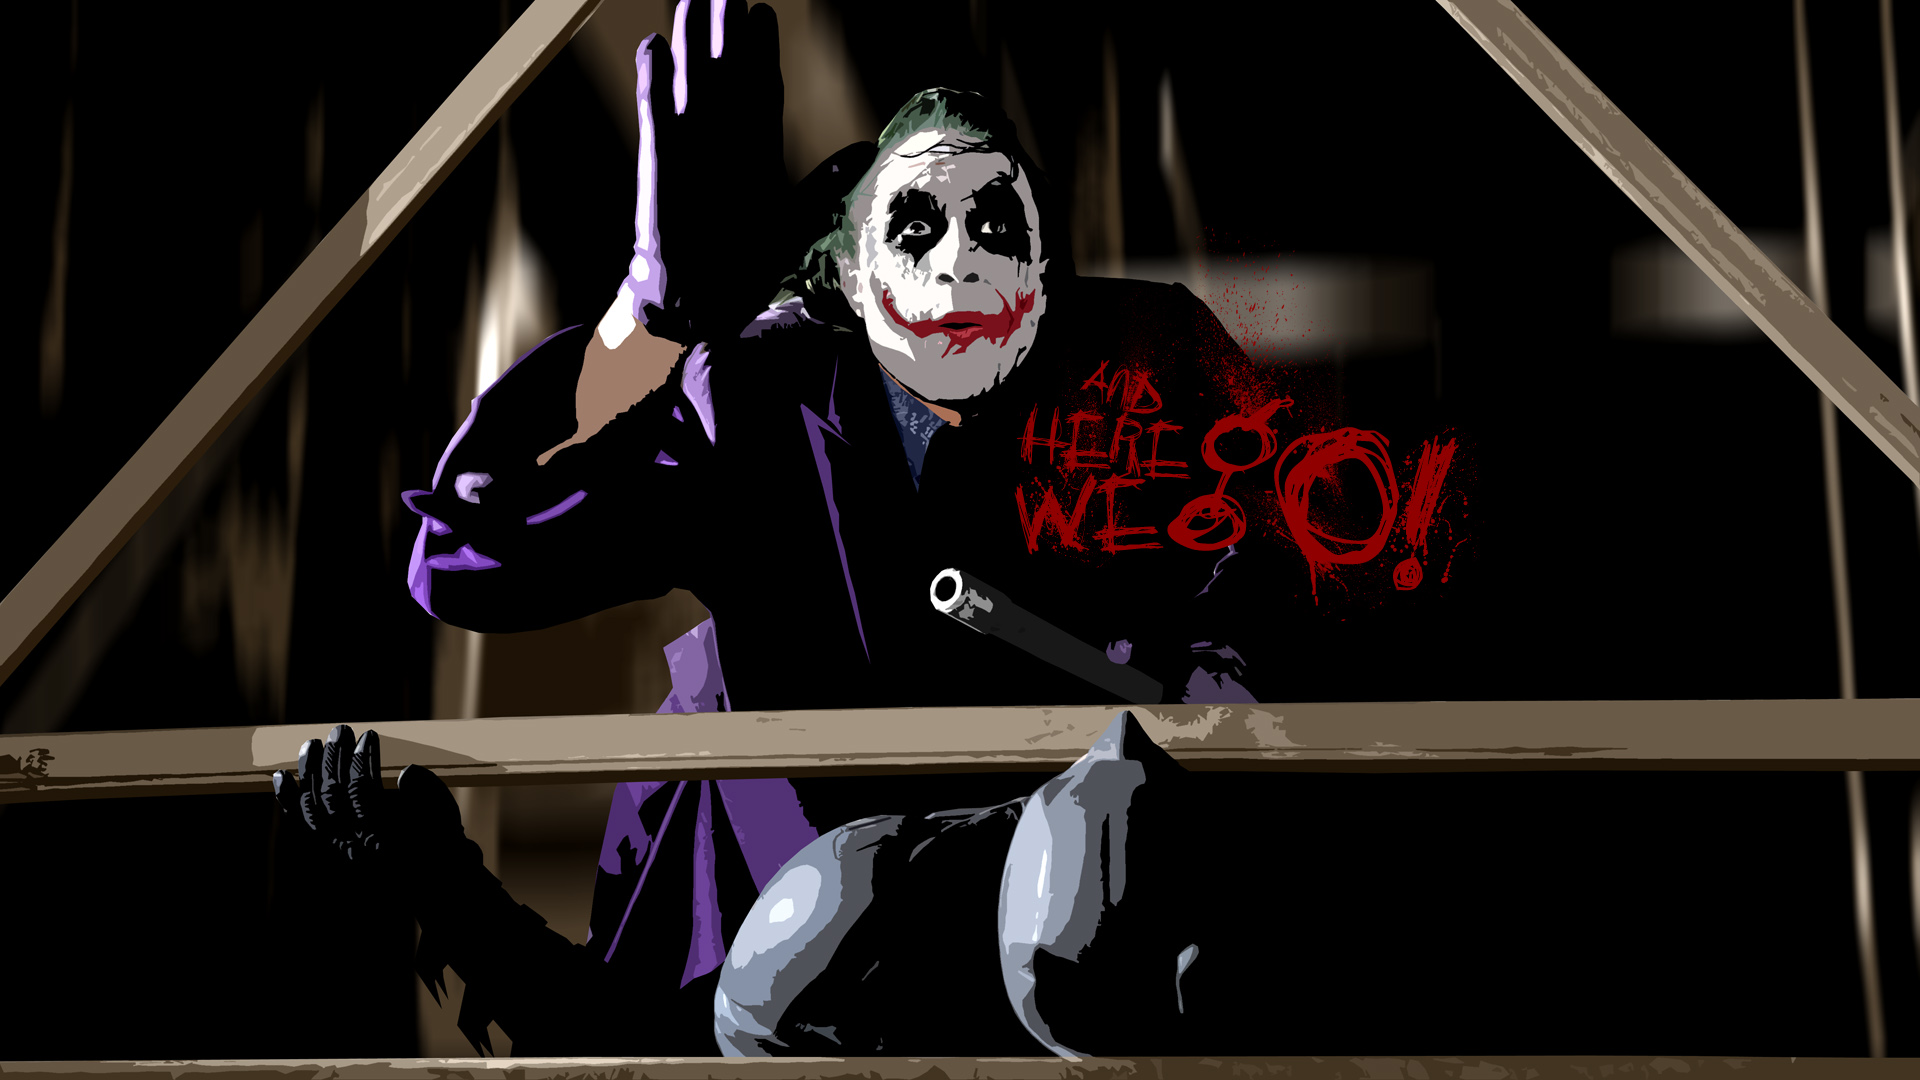 The Joker - desktop wallpaper